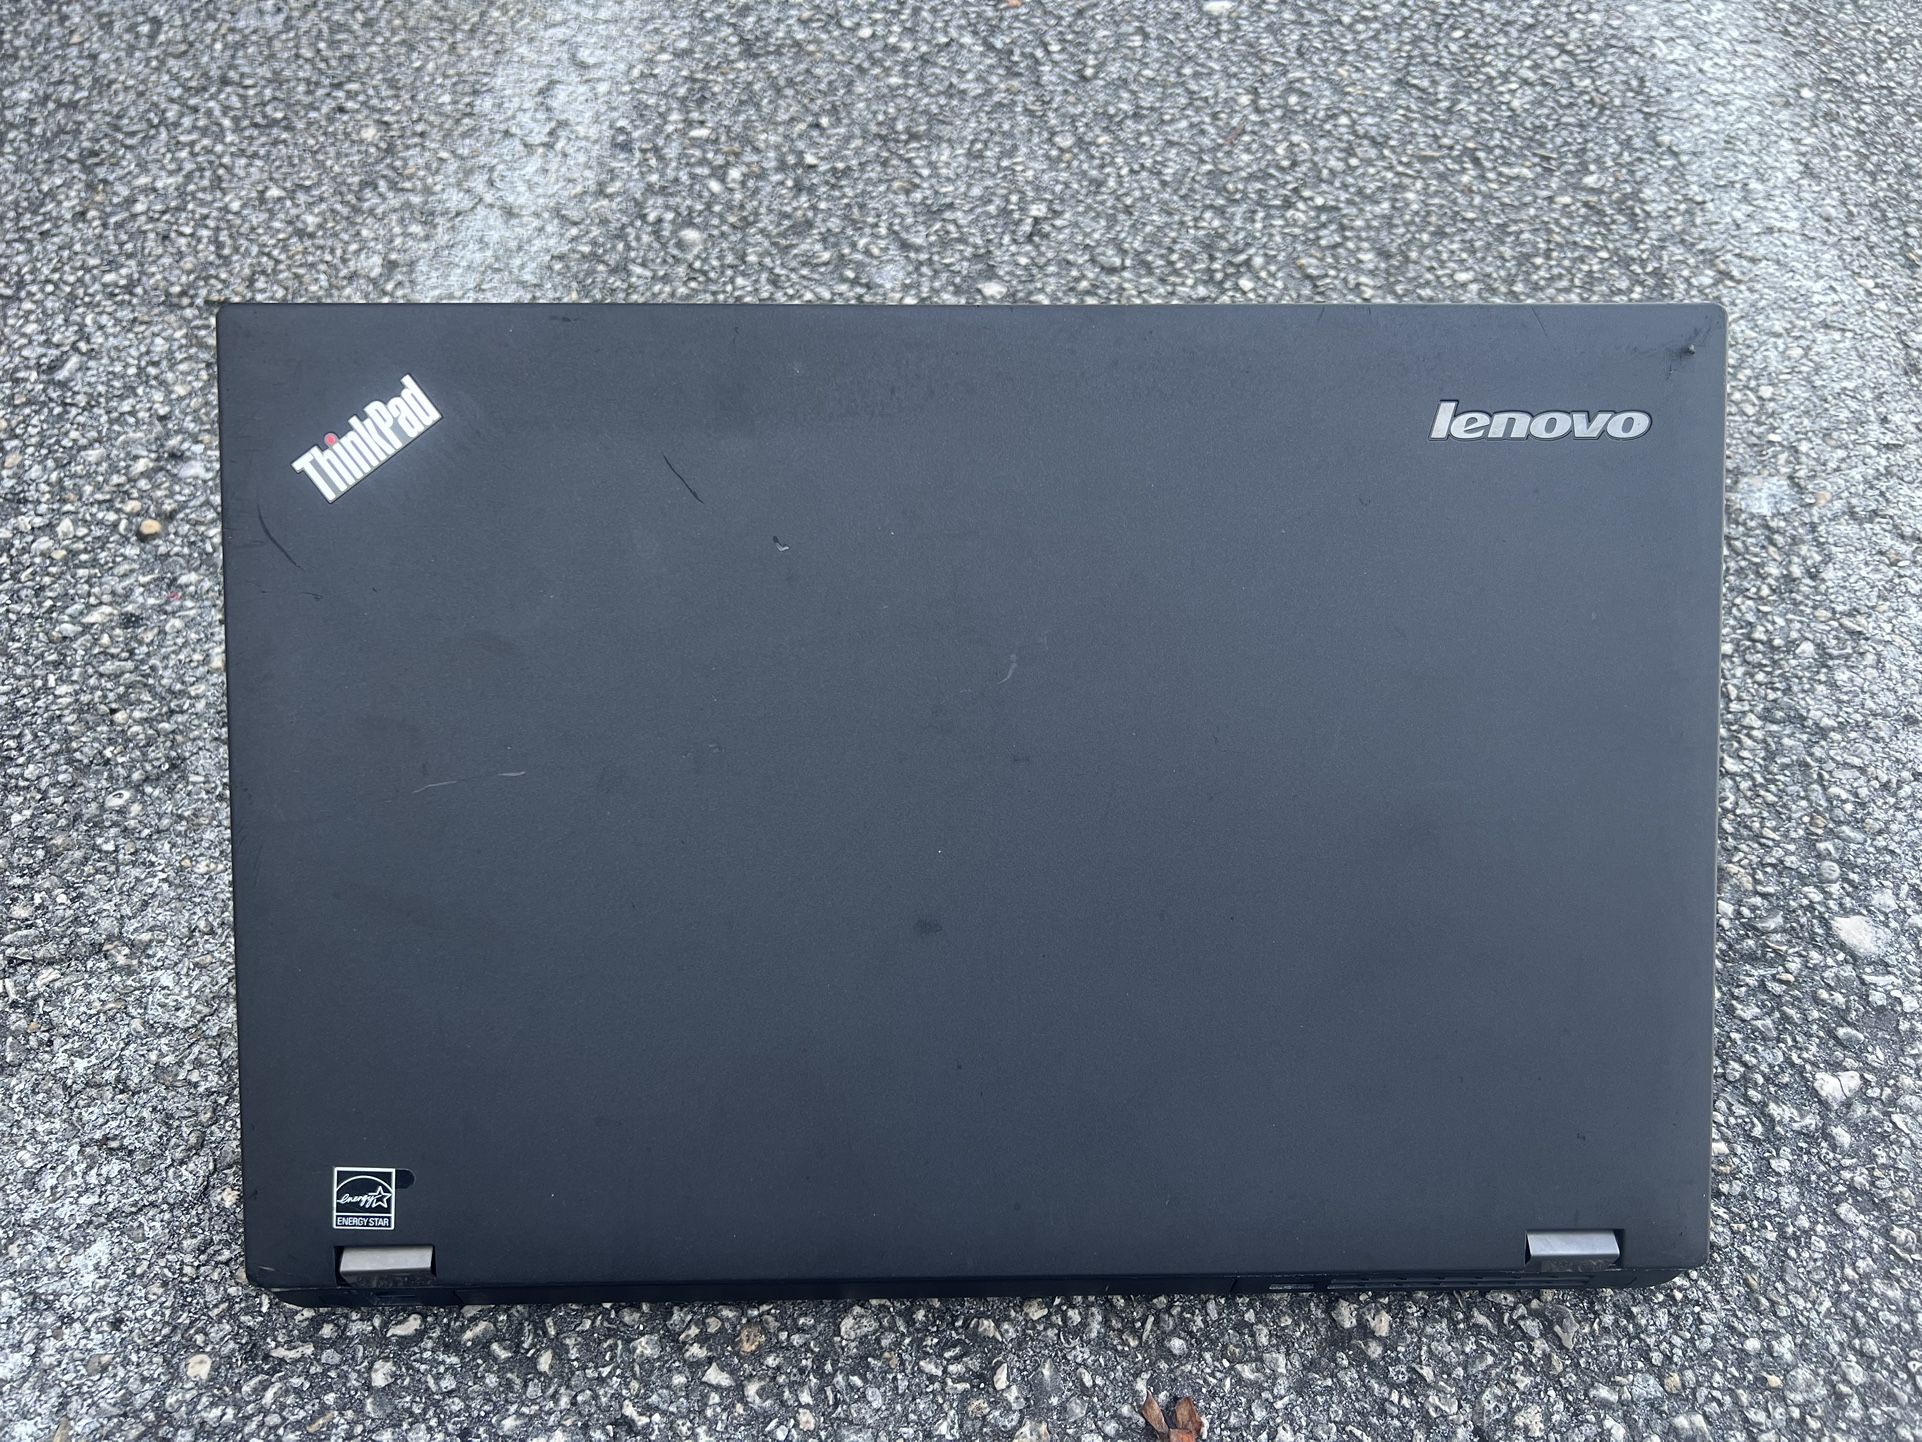 Lenovo Laptop Computer Windows 10 Pro  4 Gig Ram Wi Camera  Bluetooth  Charger 